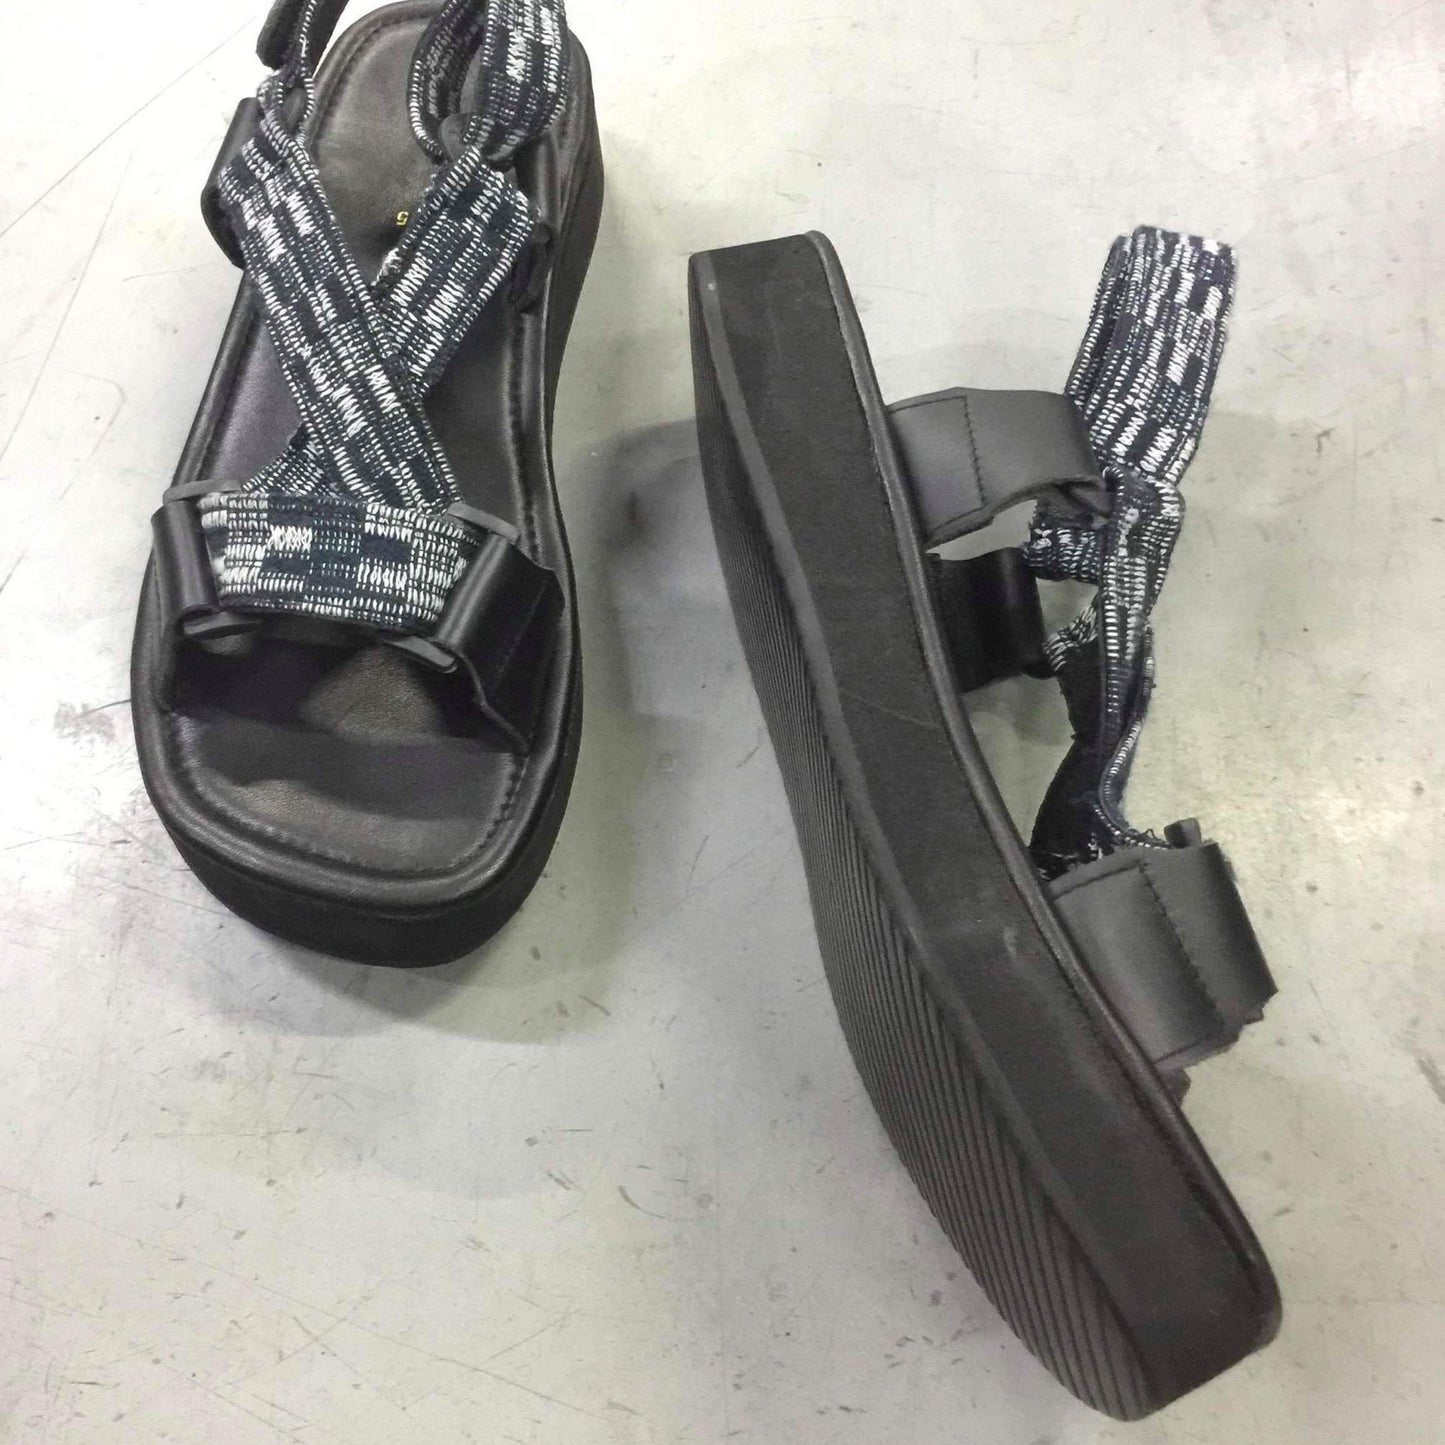 Platform Sandals - Risque Manufacturing